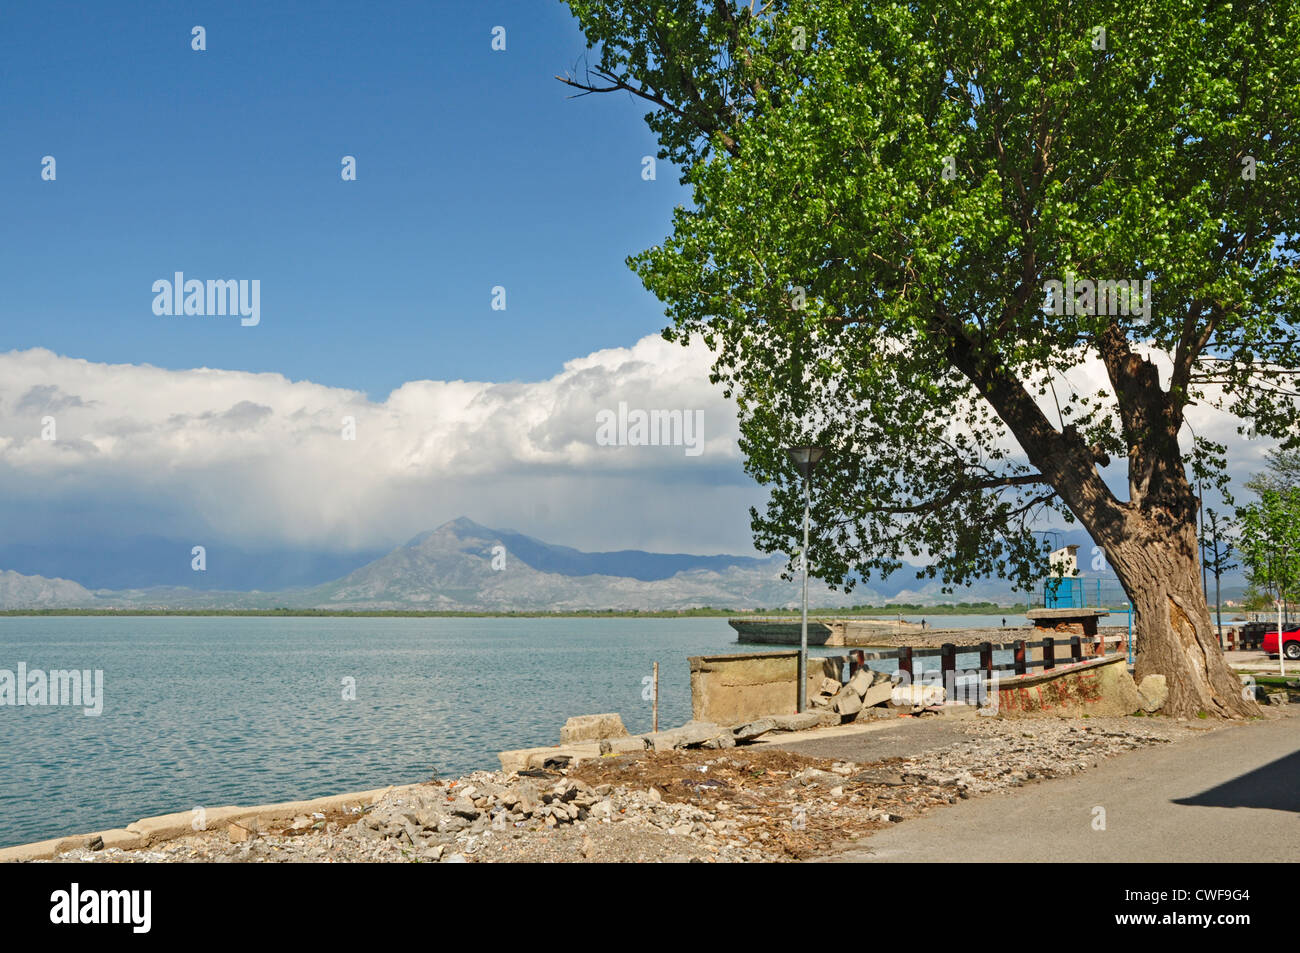 EUROPE, Albania, Lake Shkodra (Skadar Lake) beauty spot, view of lake Stock Photo